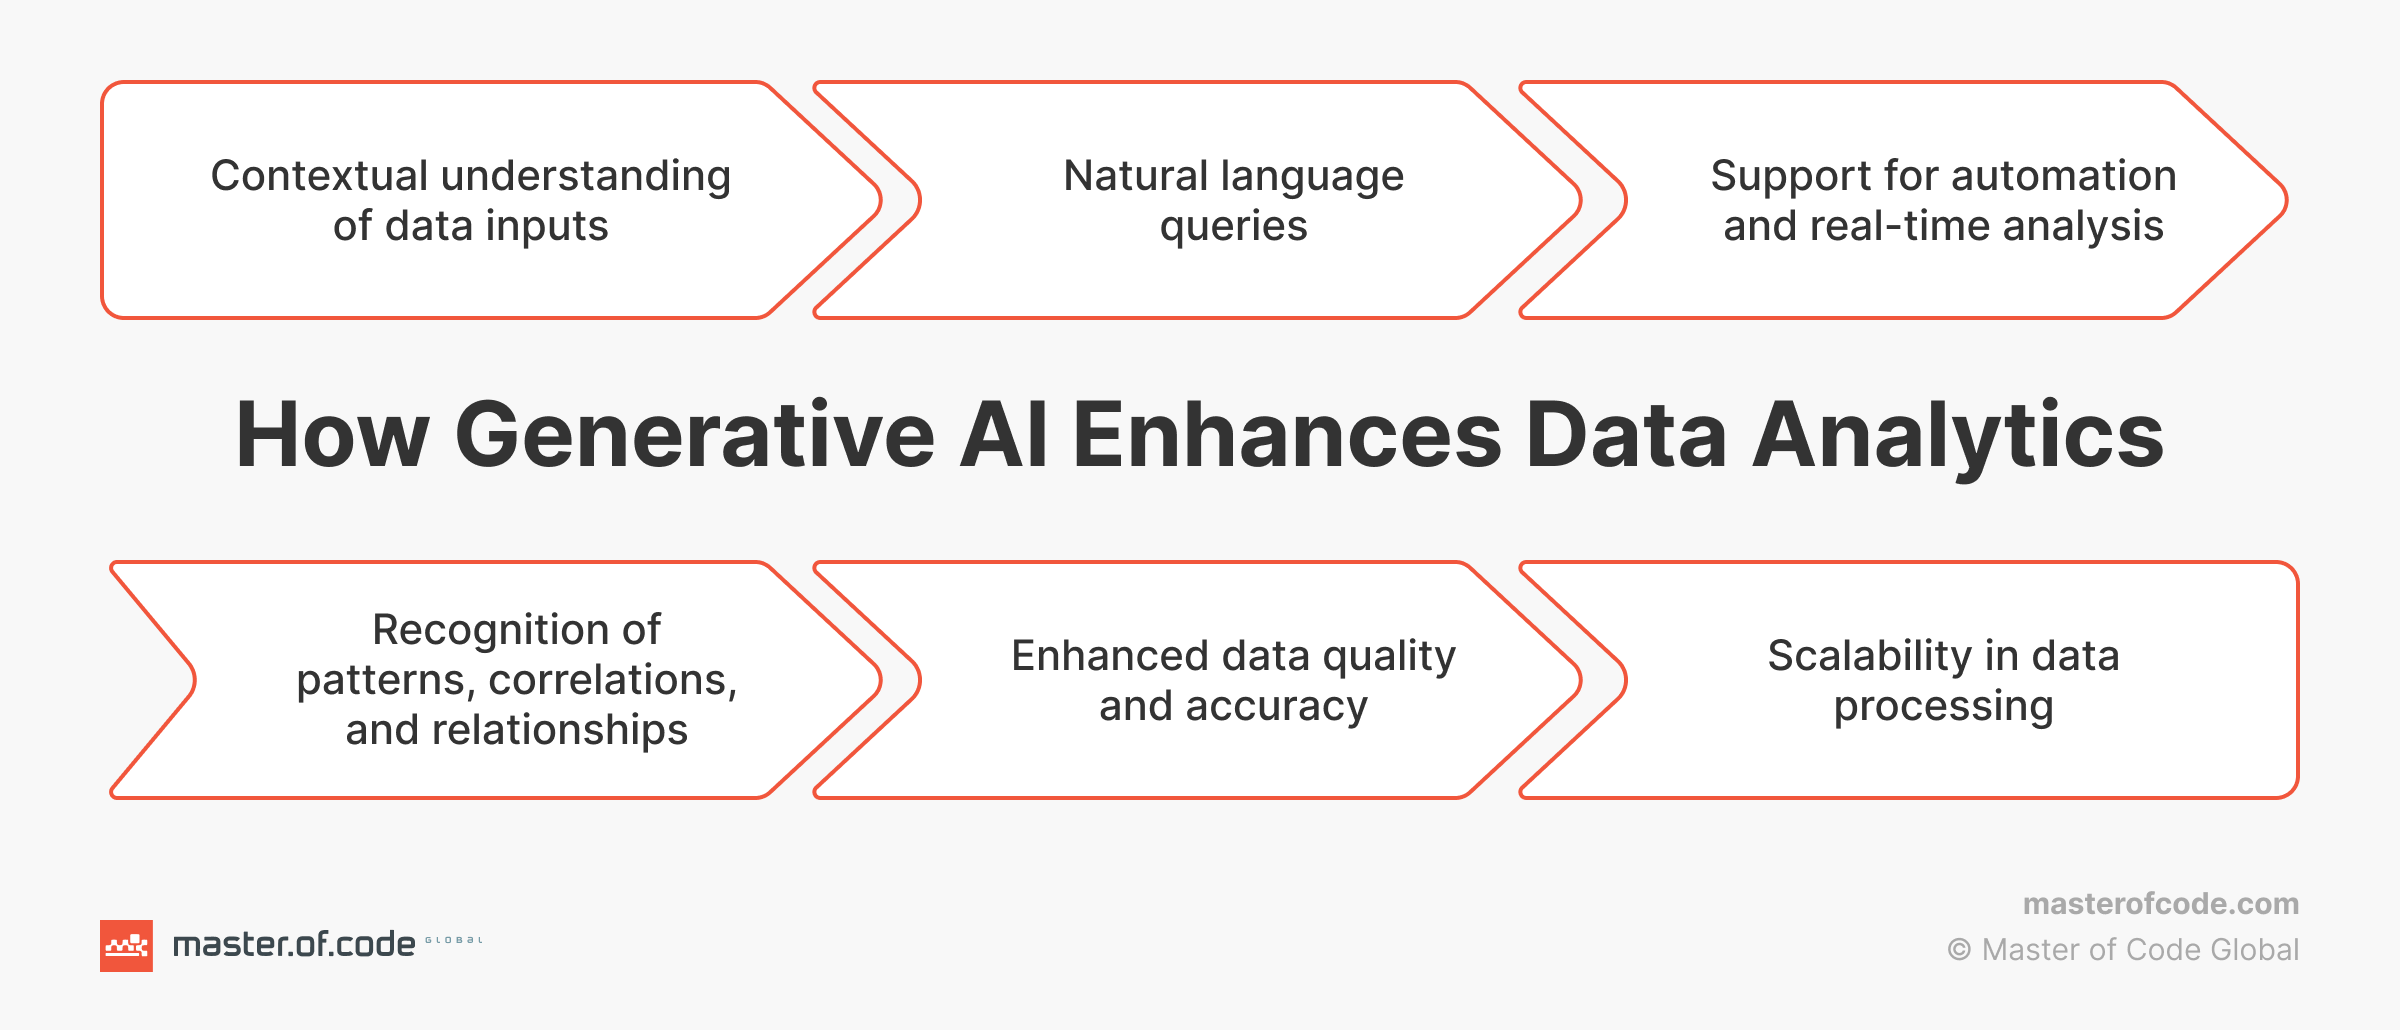 How Gen AI Enhances Data Analytics